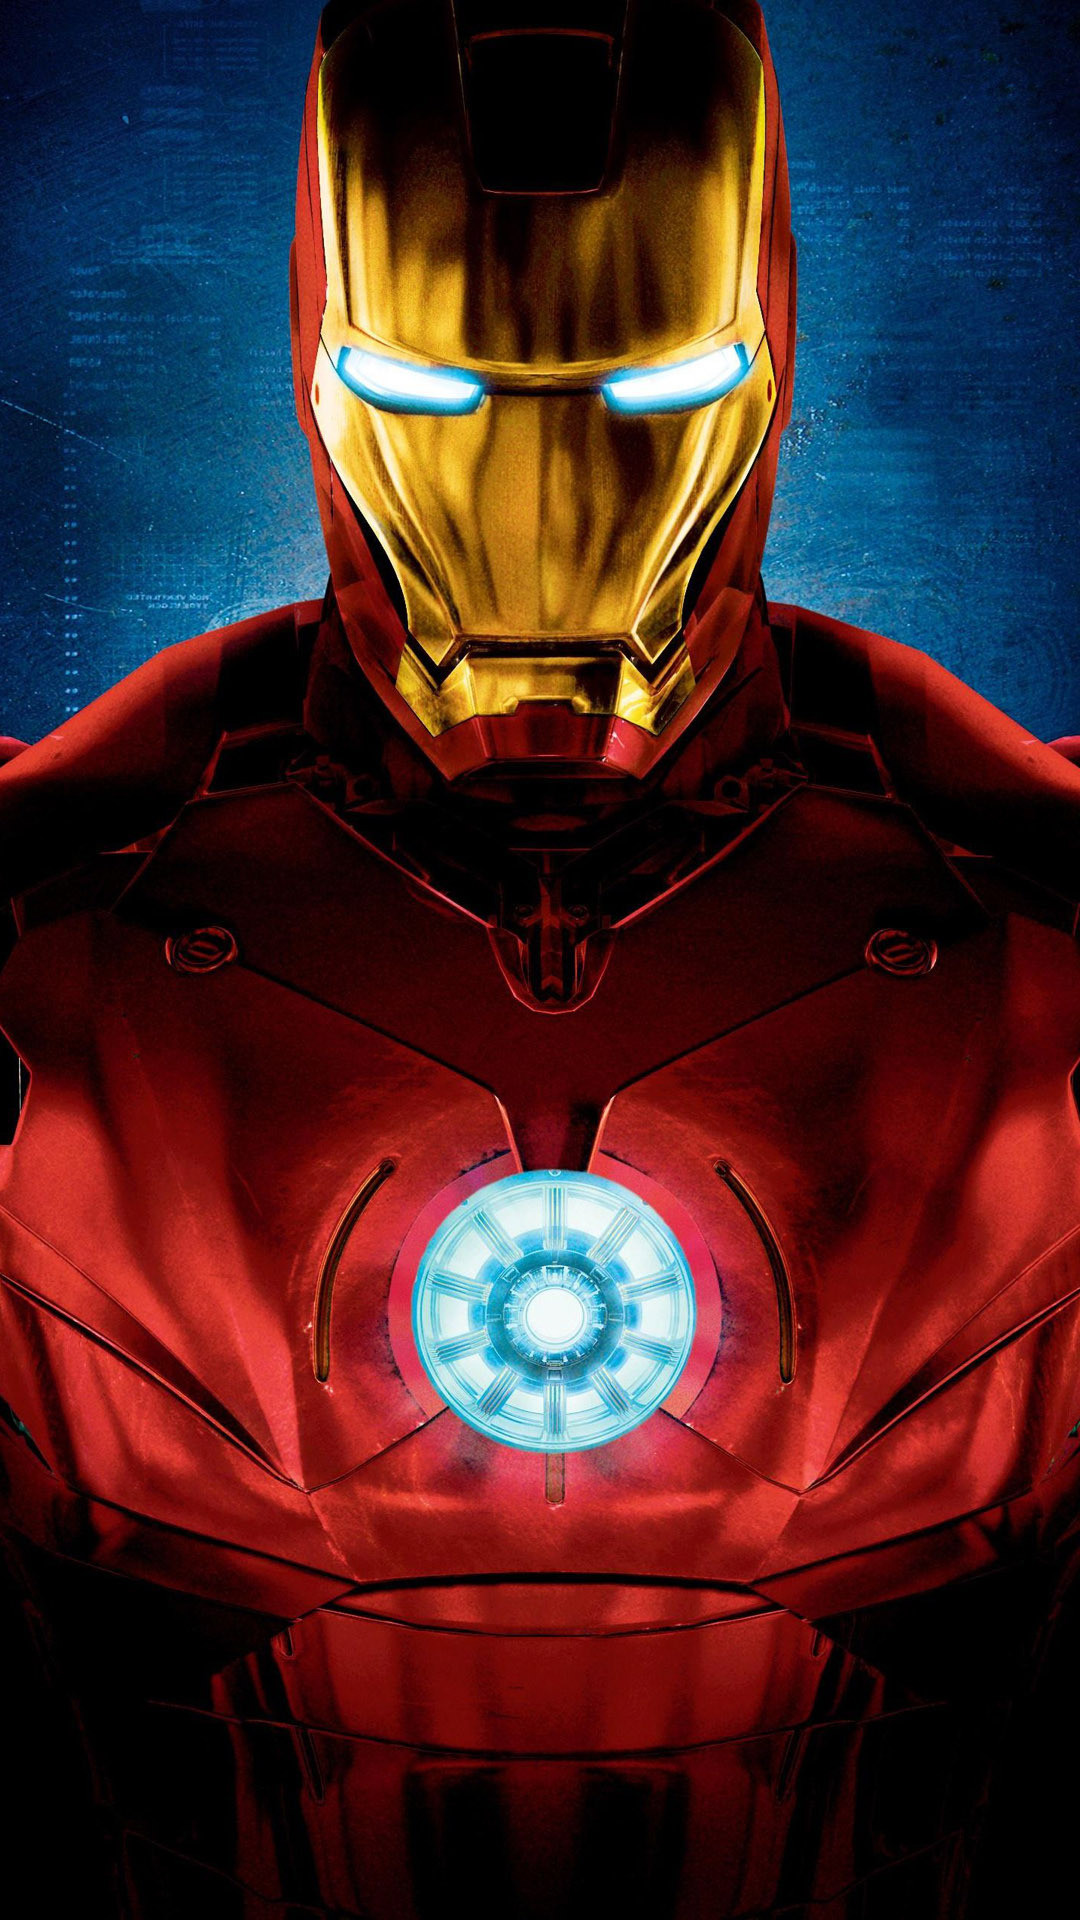 1080x1920 Iron man suit